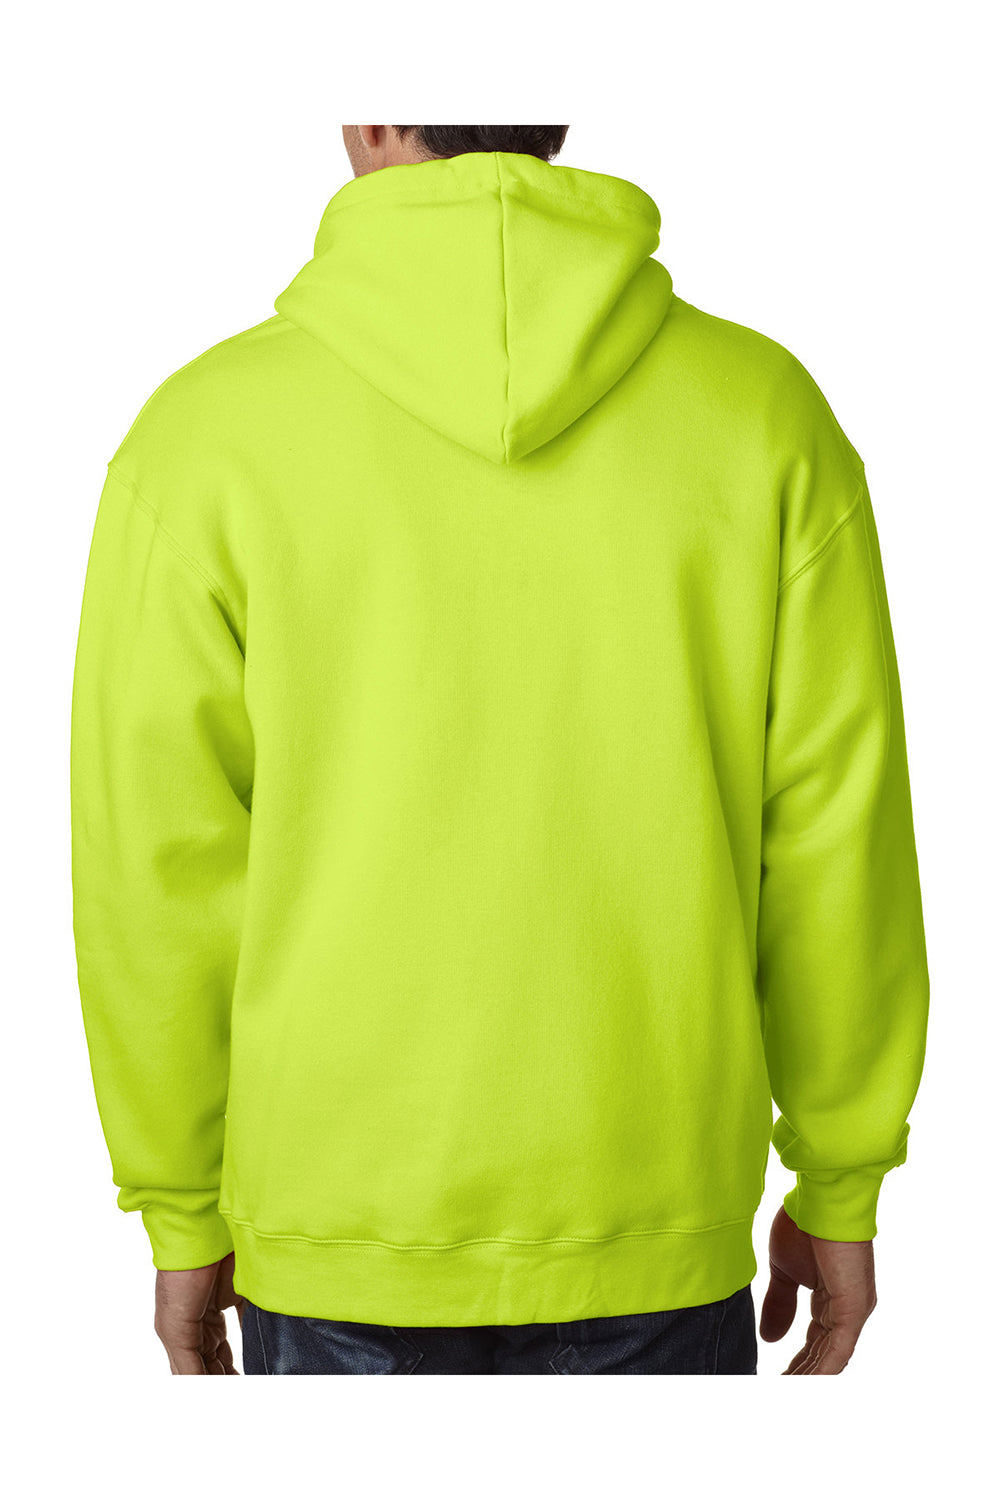 Bayside BA900 Mens USA Made Full Zip Hooded Sweatshirt Hoodie Lime Green Model Back